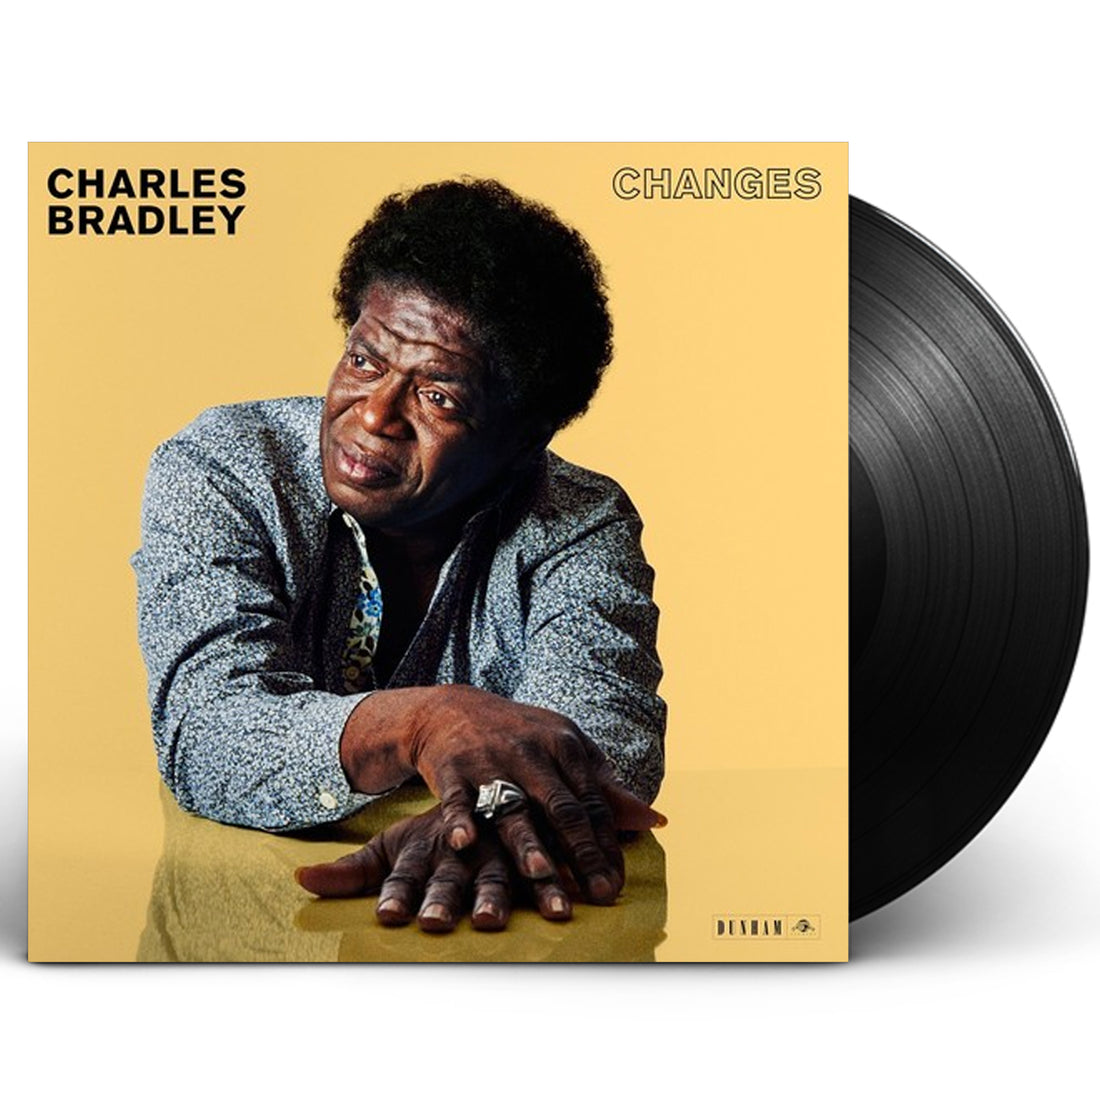 Charles Bradley "Changes" LP Vinyl